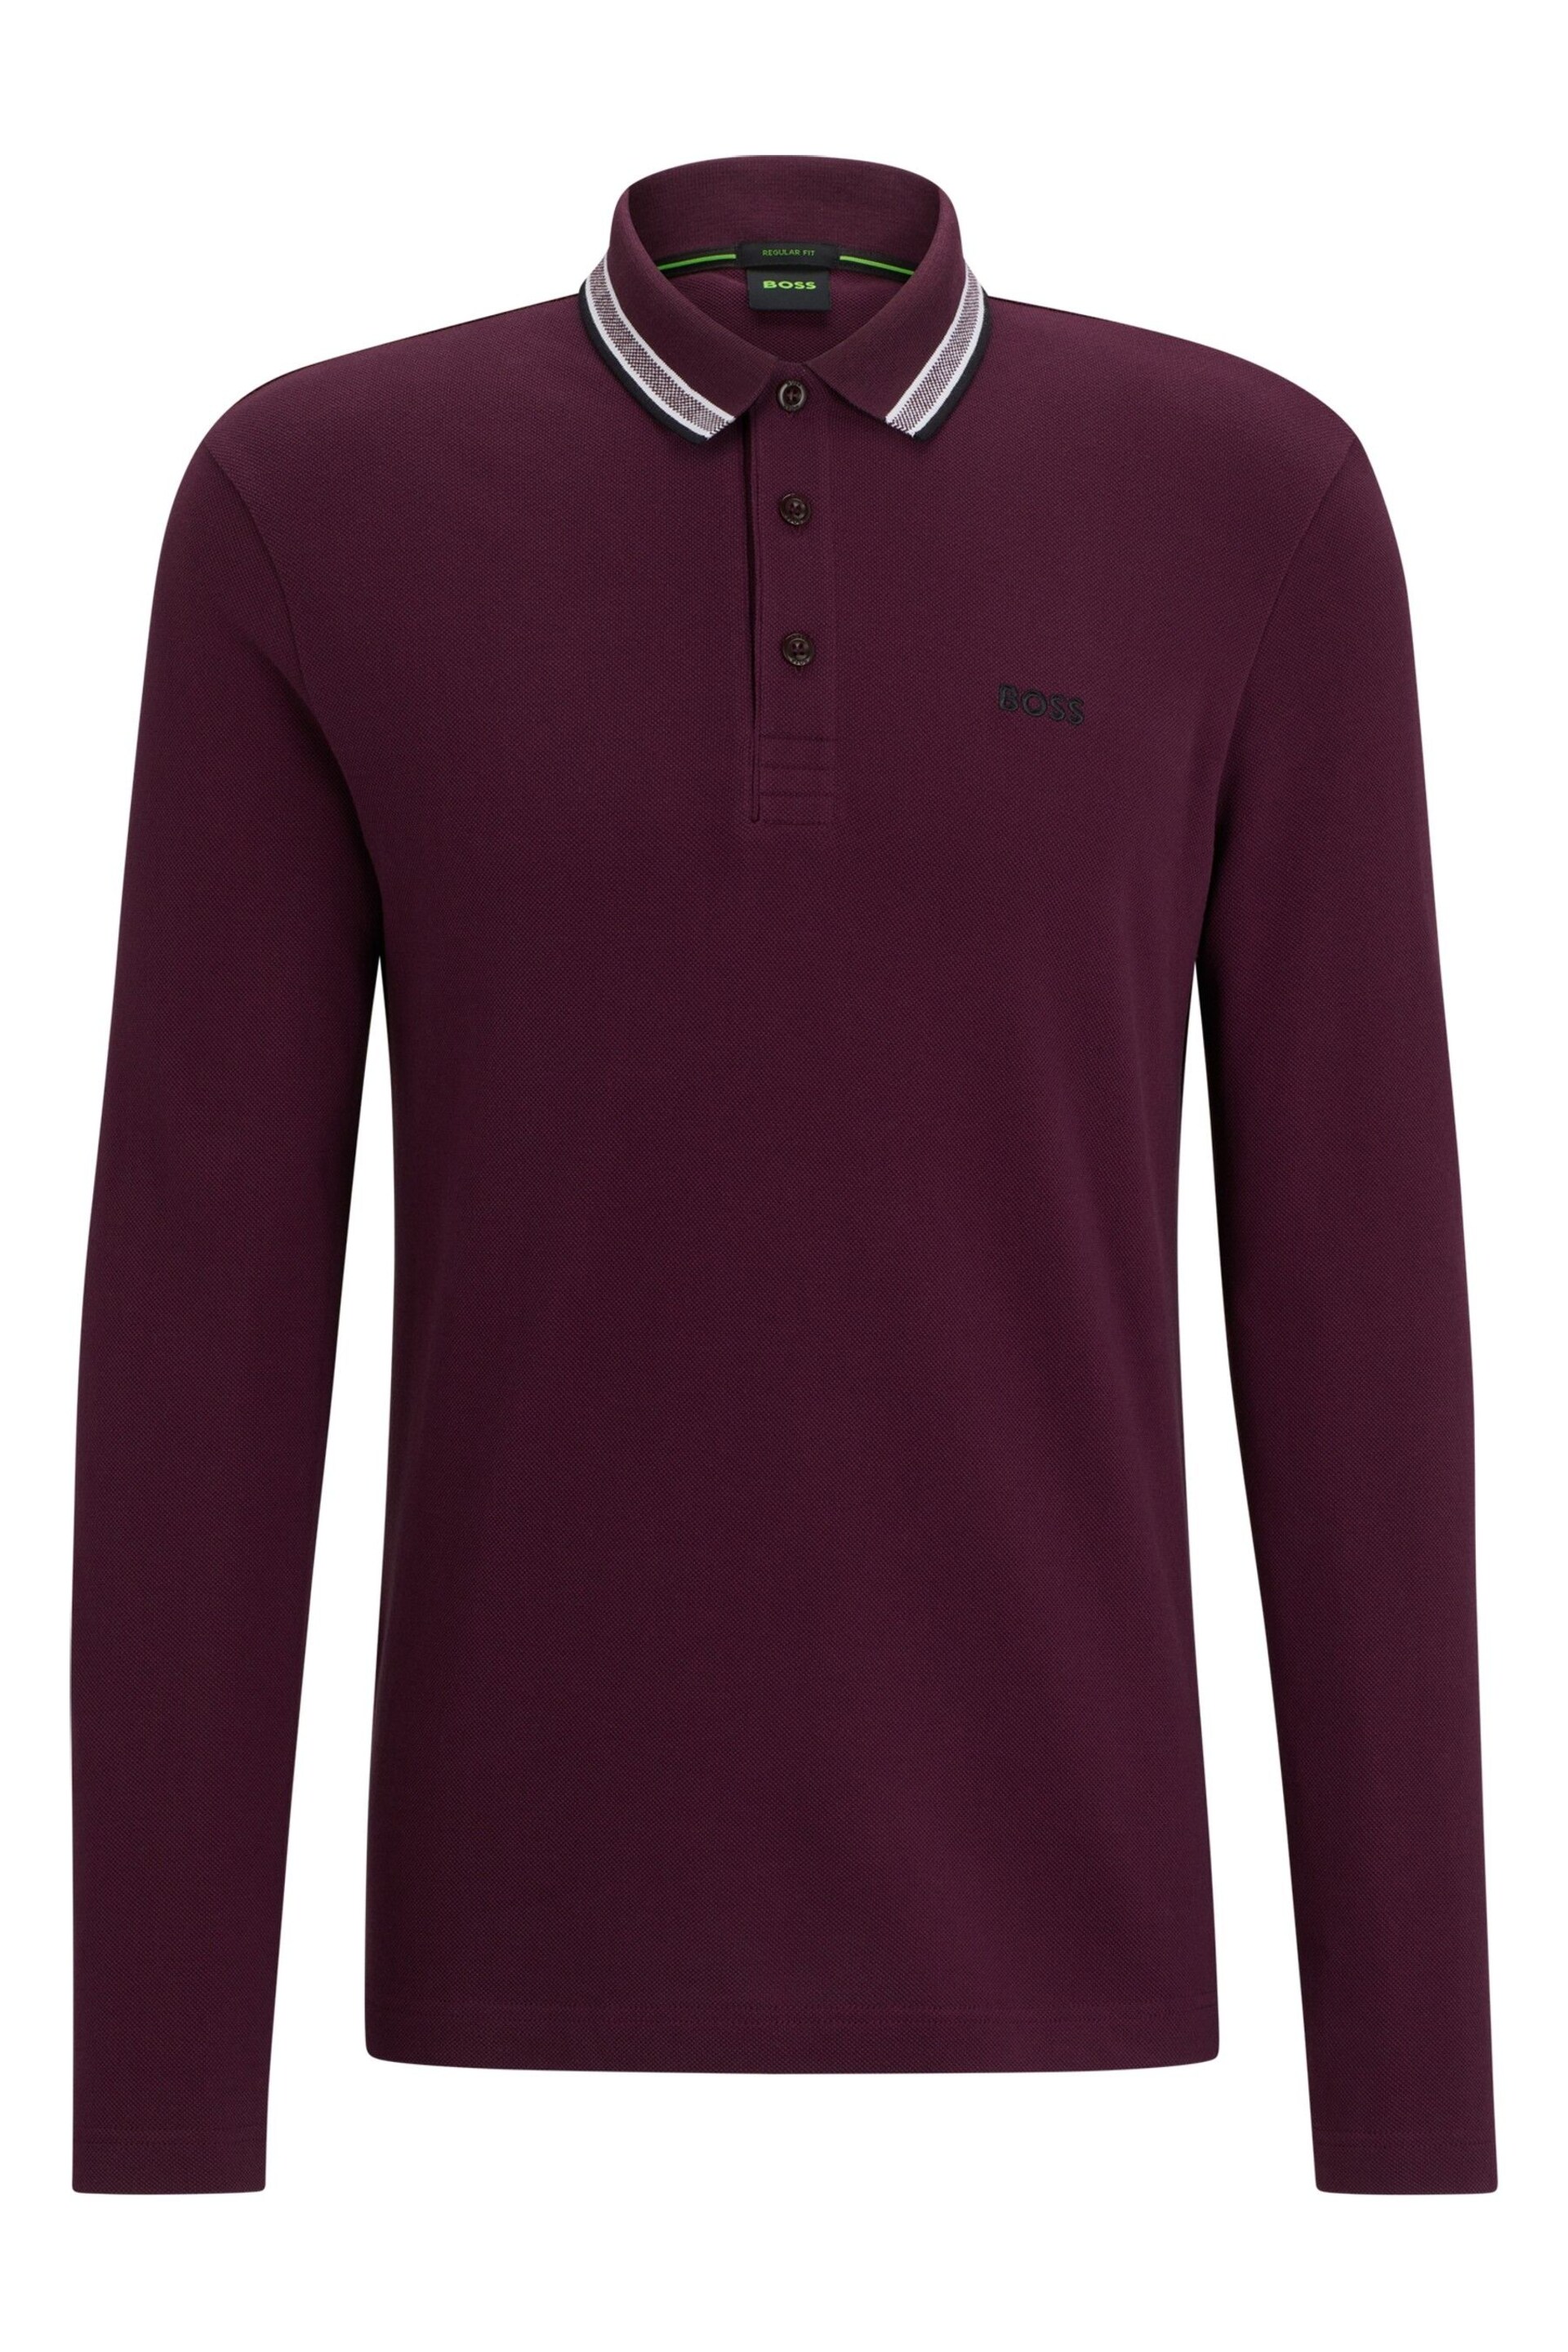 BOSS Purple Tipped Collar Long Sleeve Polo Shirt - Image 5 of 5